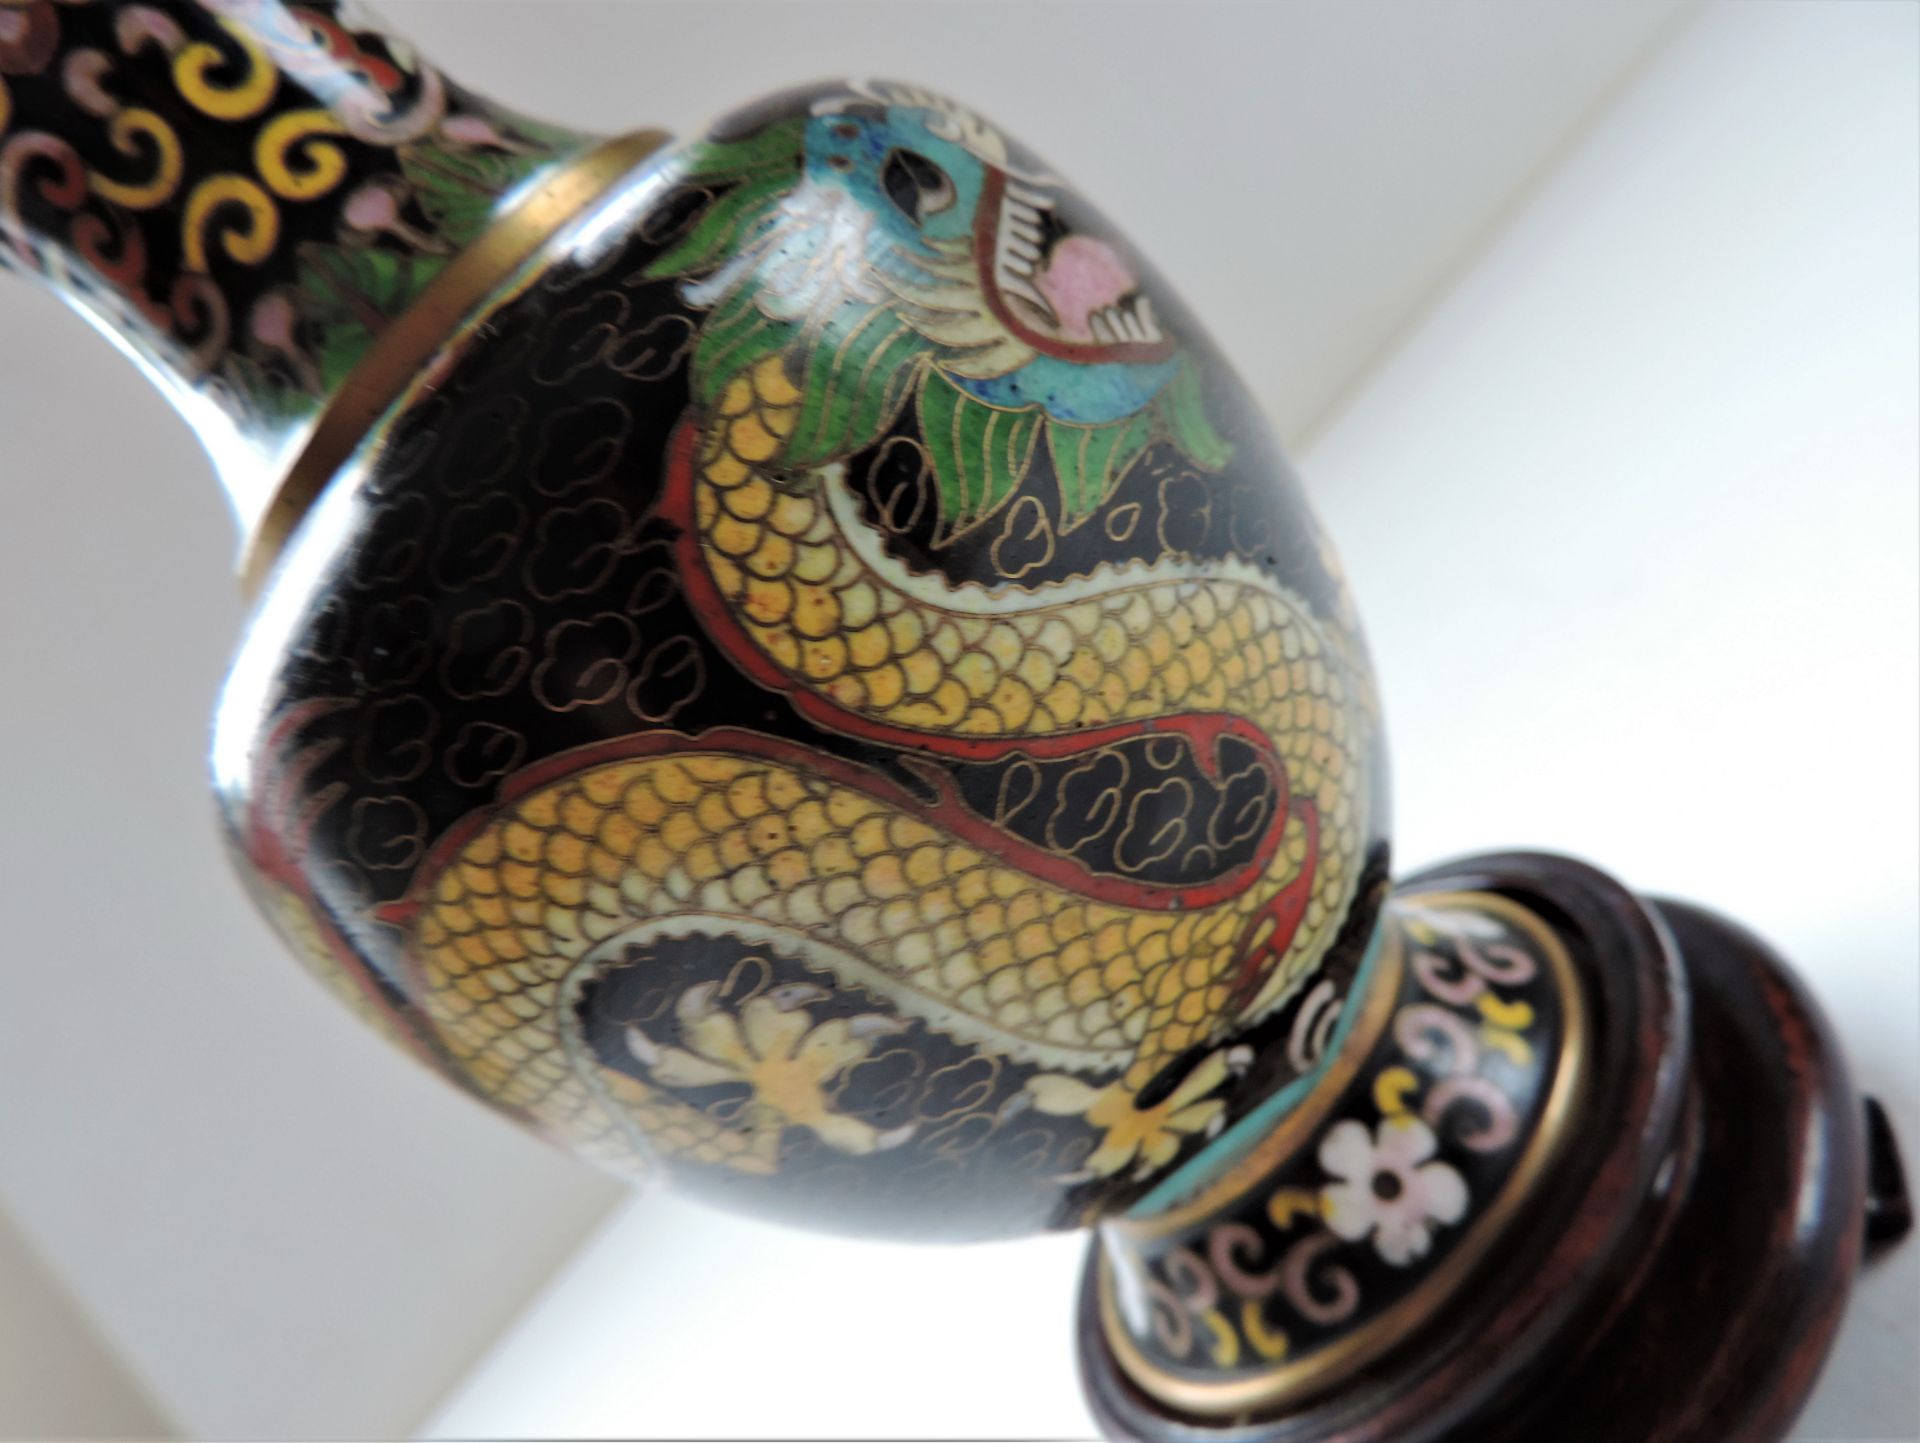 Vintage Cloisonne Imperial Dragon Vase 16cm tall - Image 5 of 7